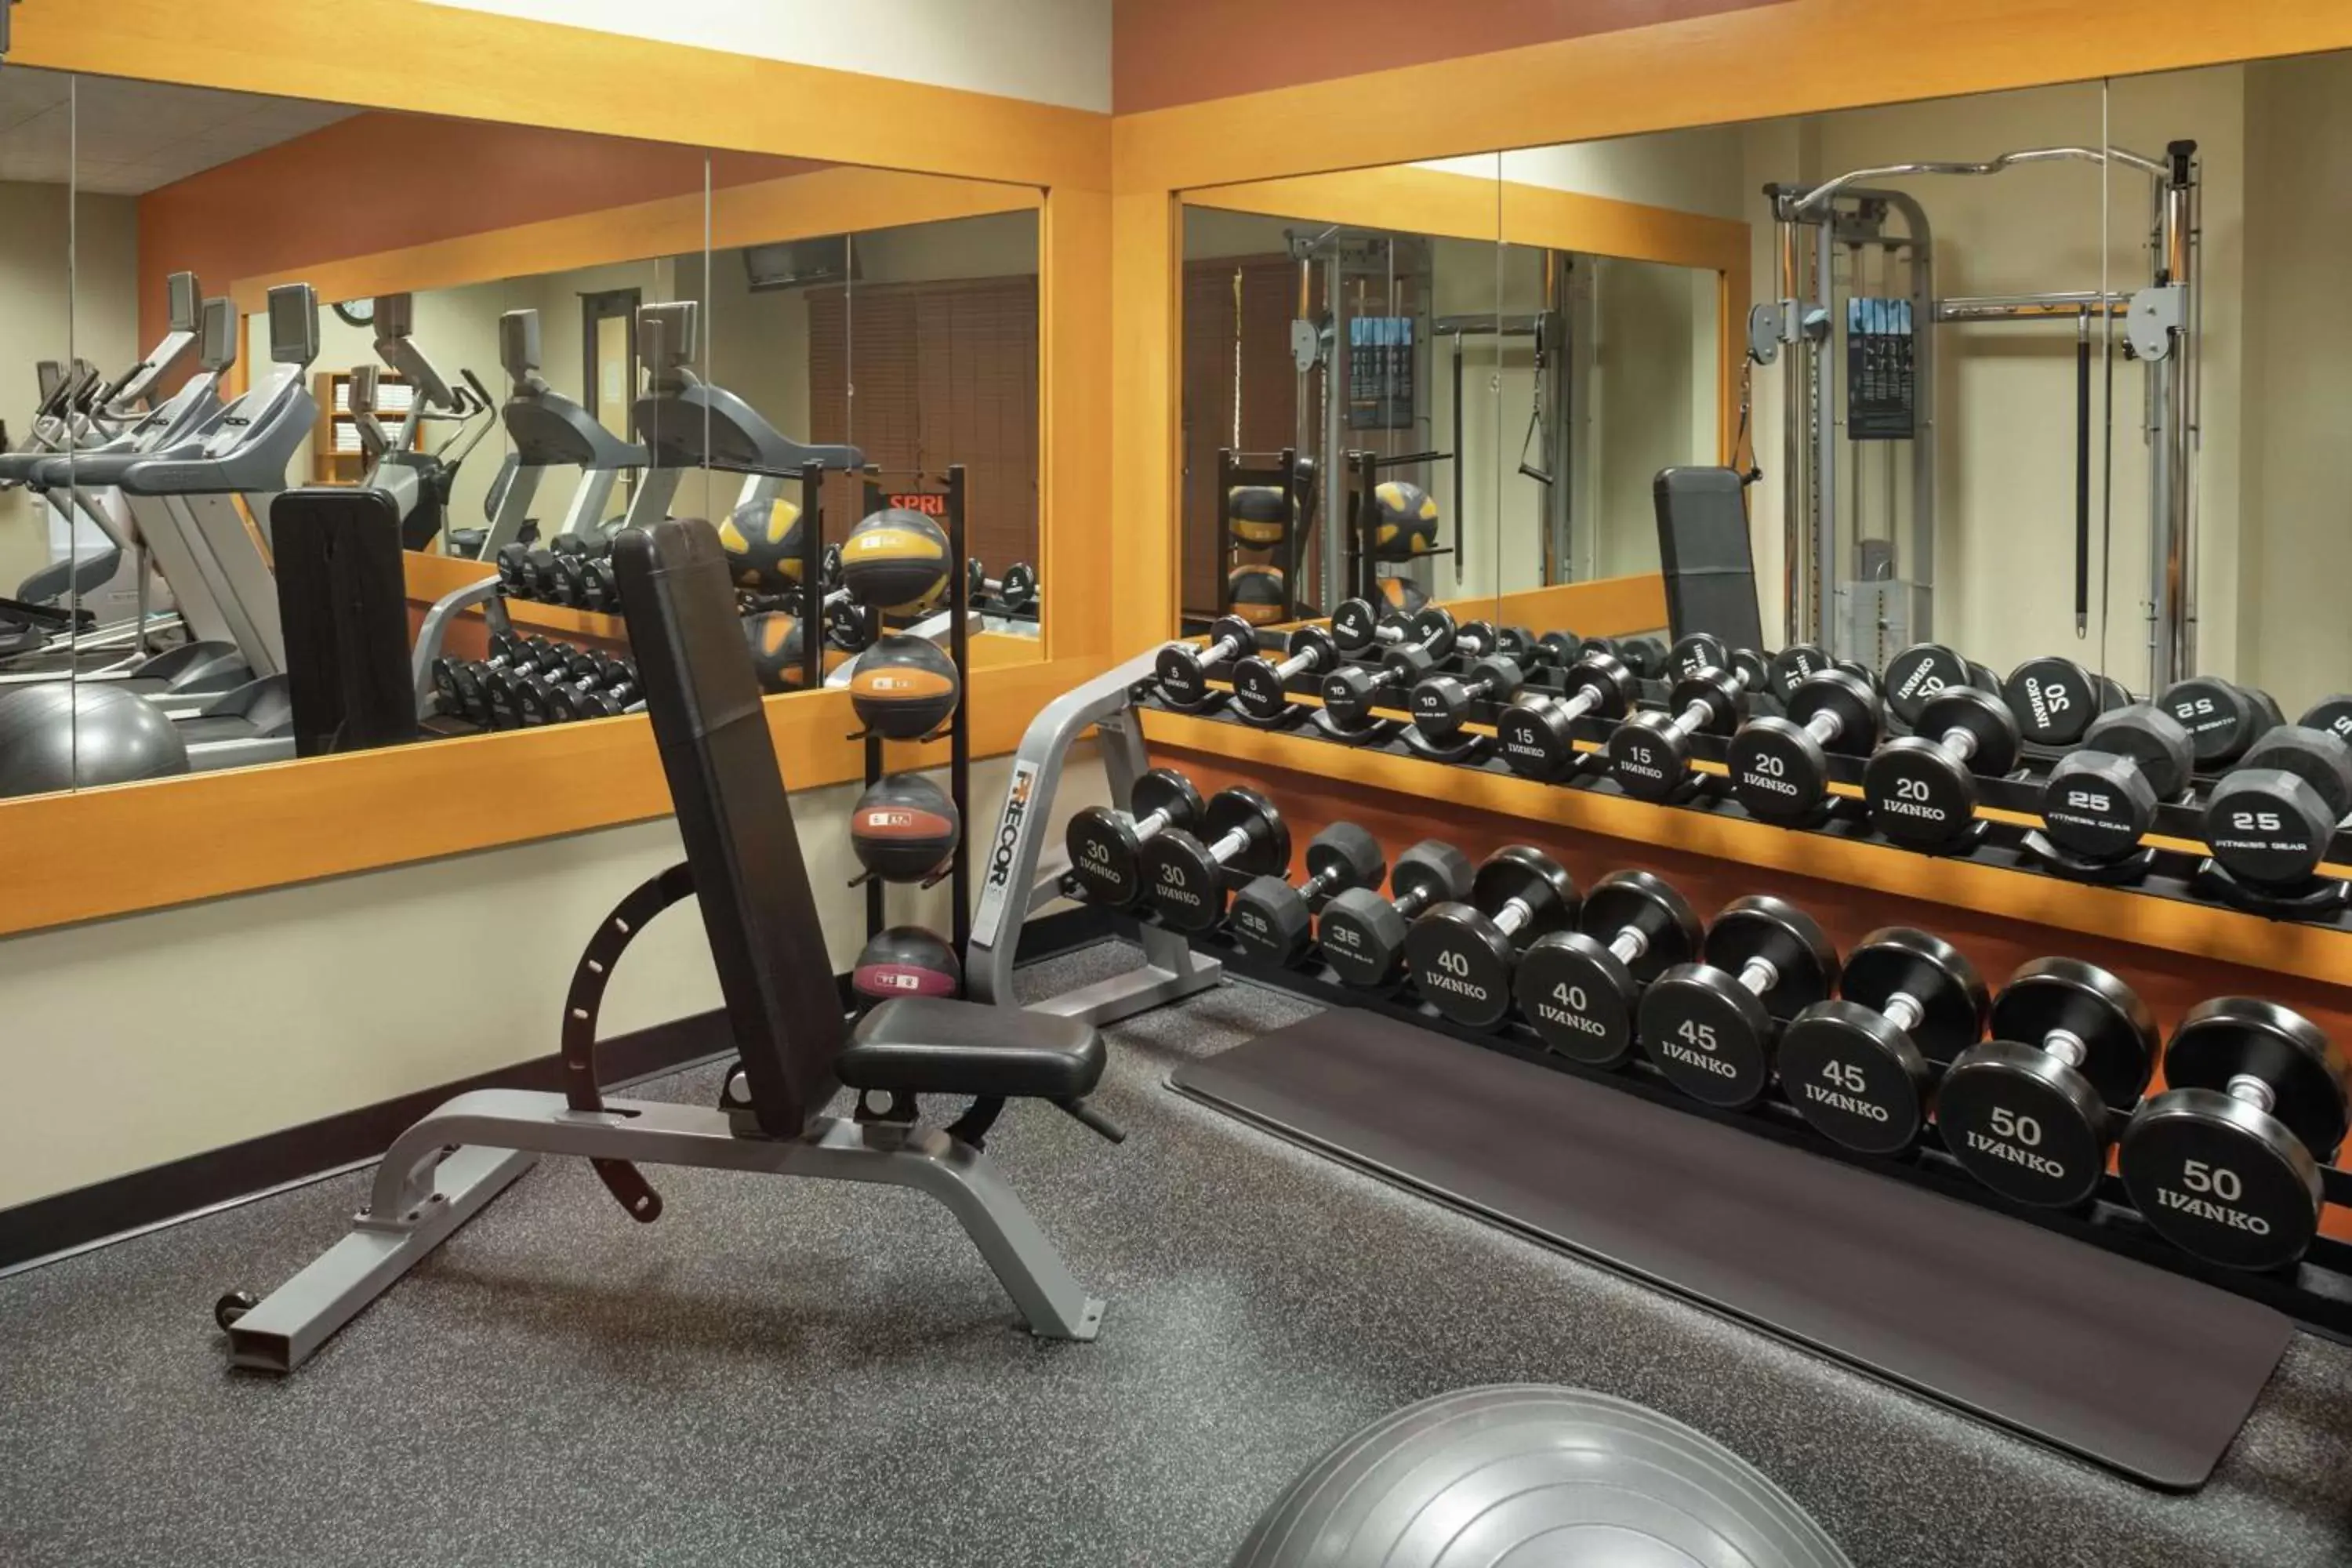 Fitness centre/facilities, Fitness Center/Facilities in Hilton Garden Inn Troy